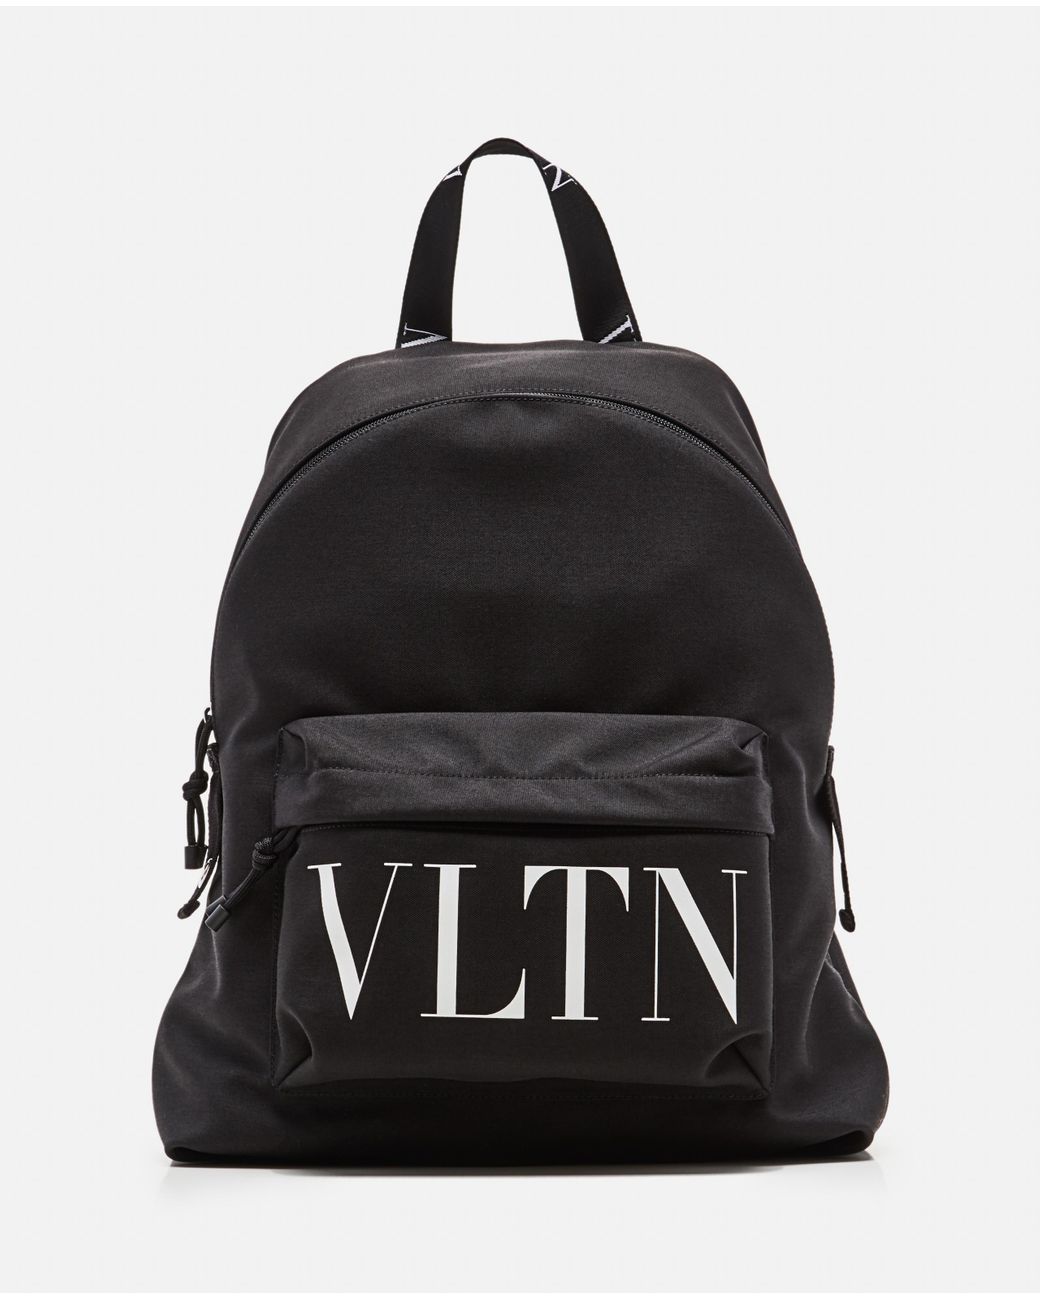 Valentino Synthetic 'vltn' Backpack in Black for Men - Lyst